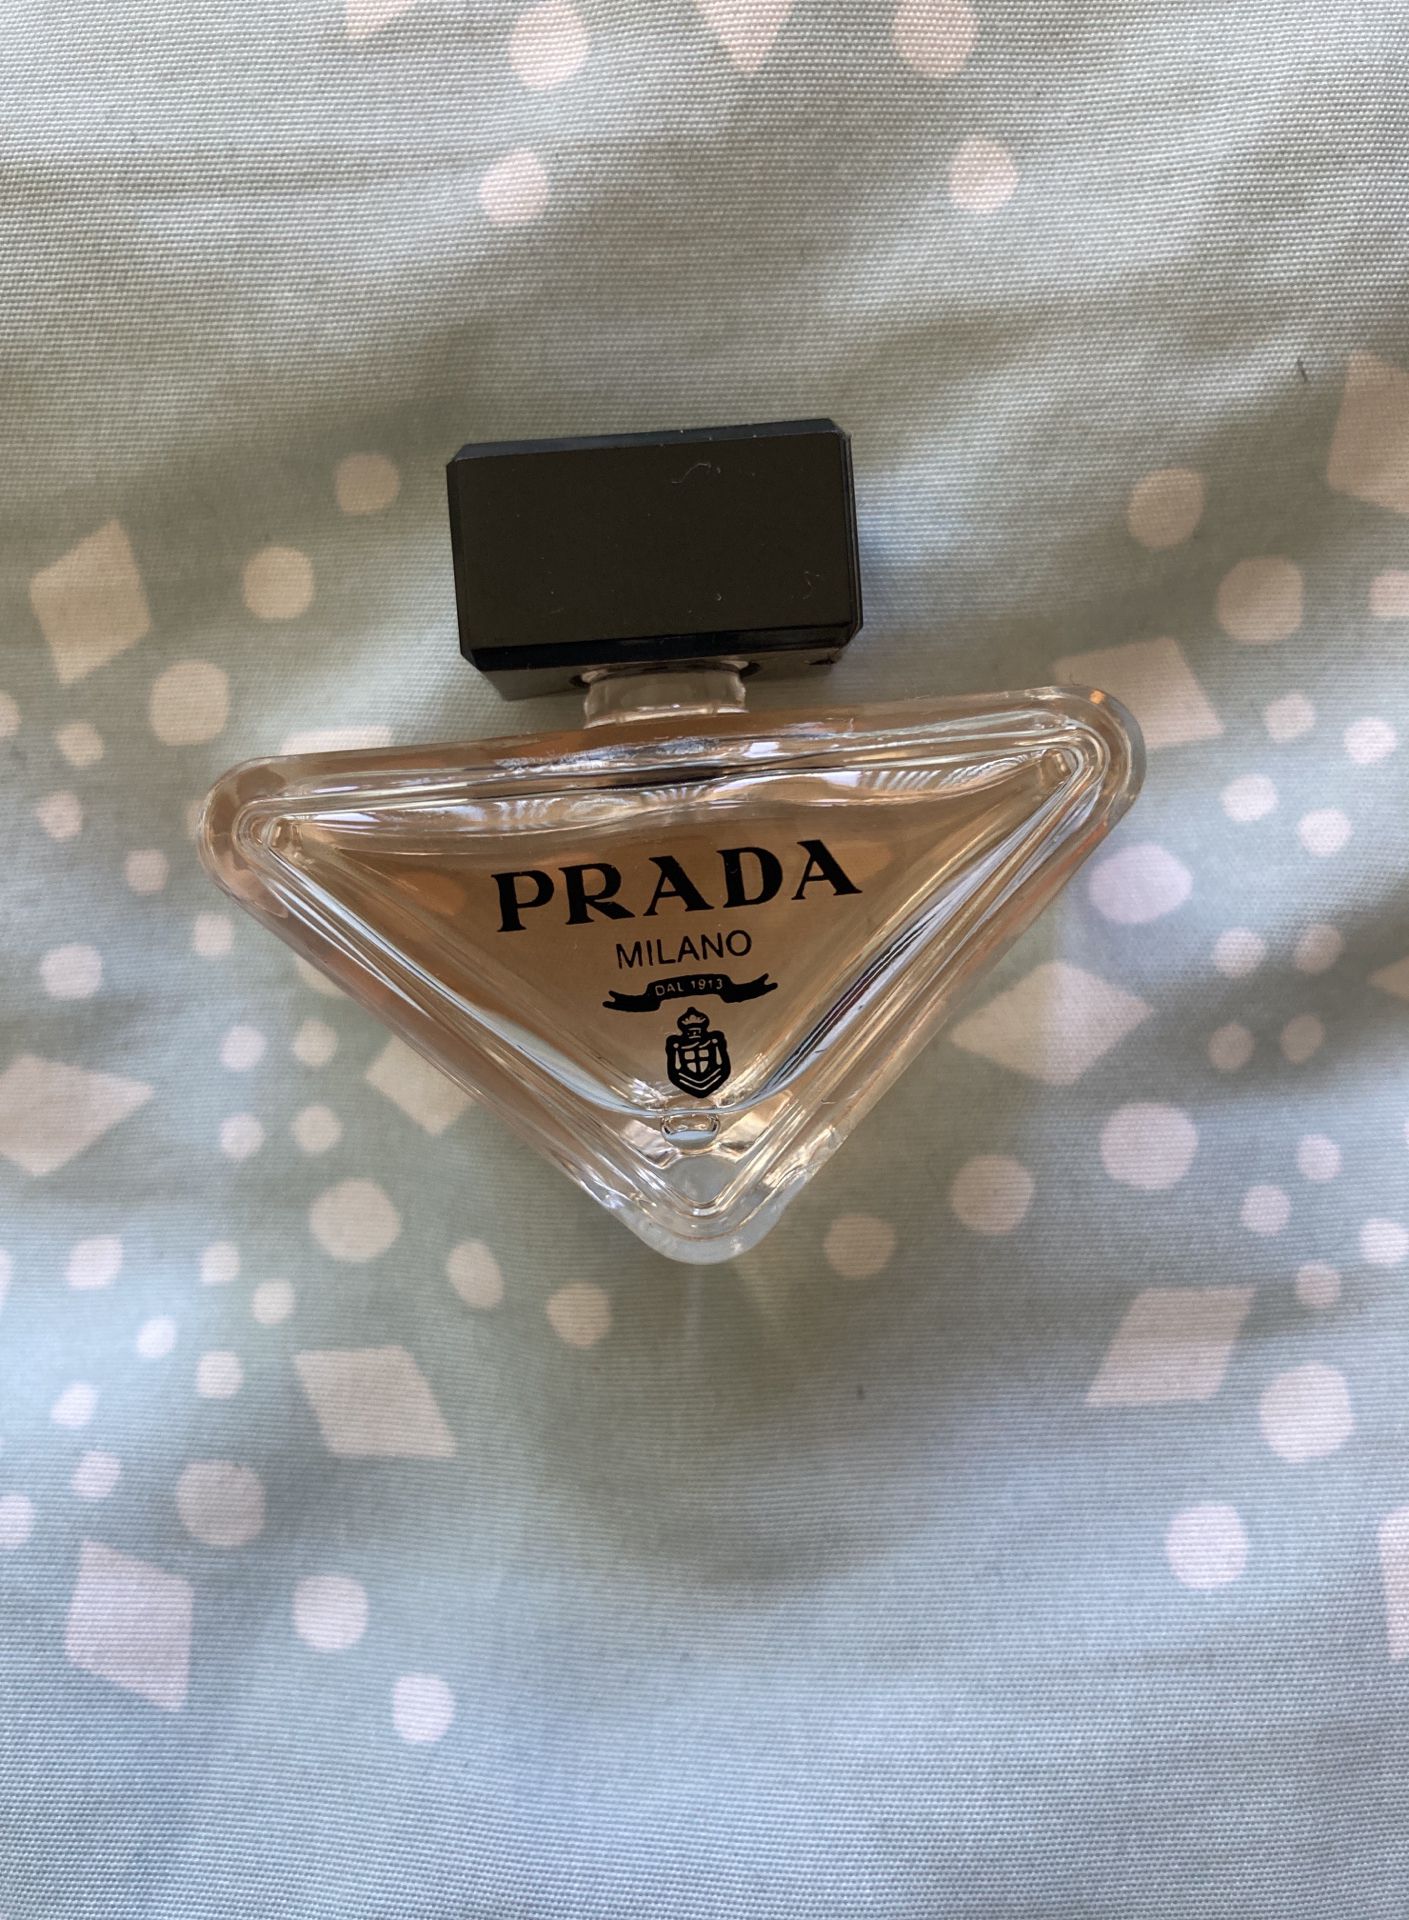 Prada Milano Perfume 